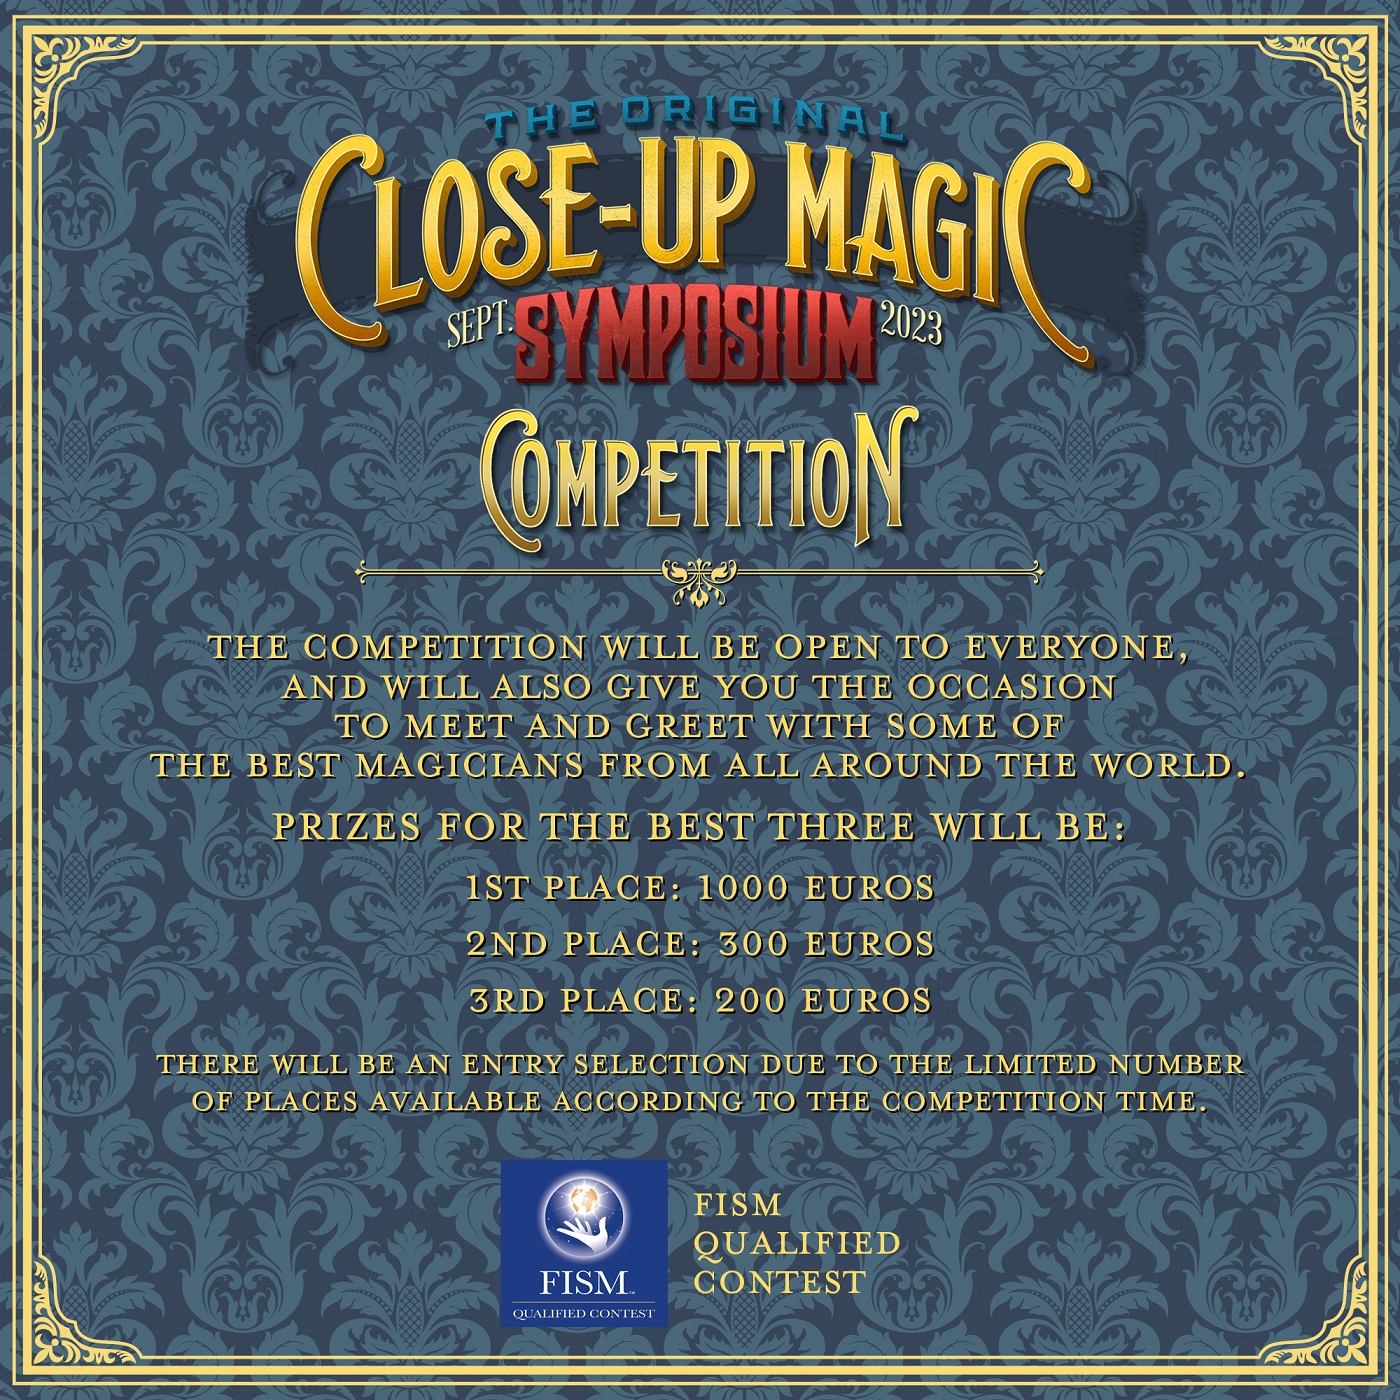 Close-Up Magic Symposium International Gala Show 2023